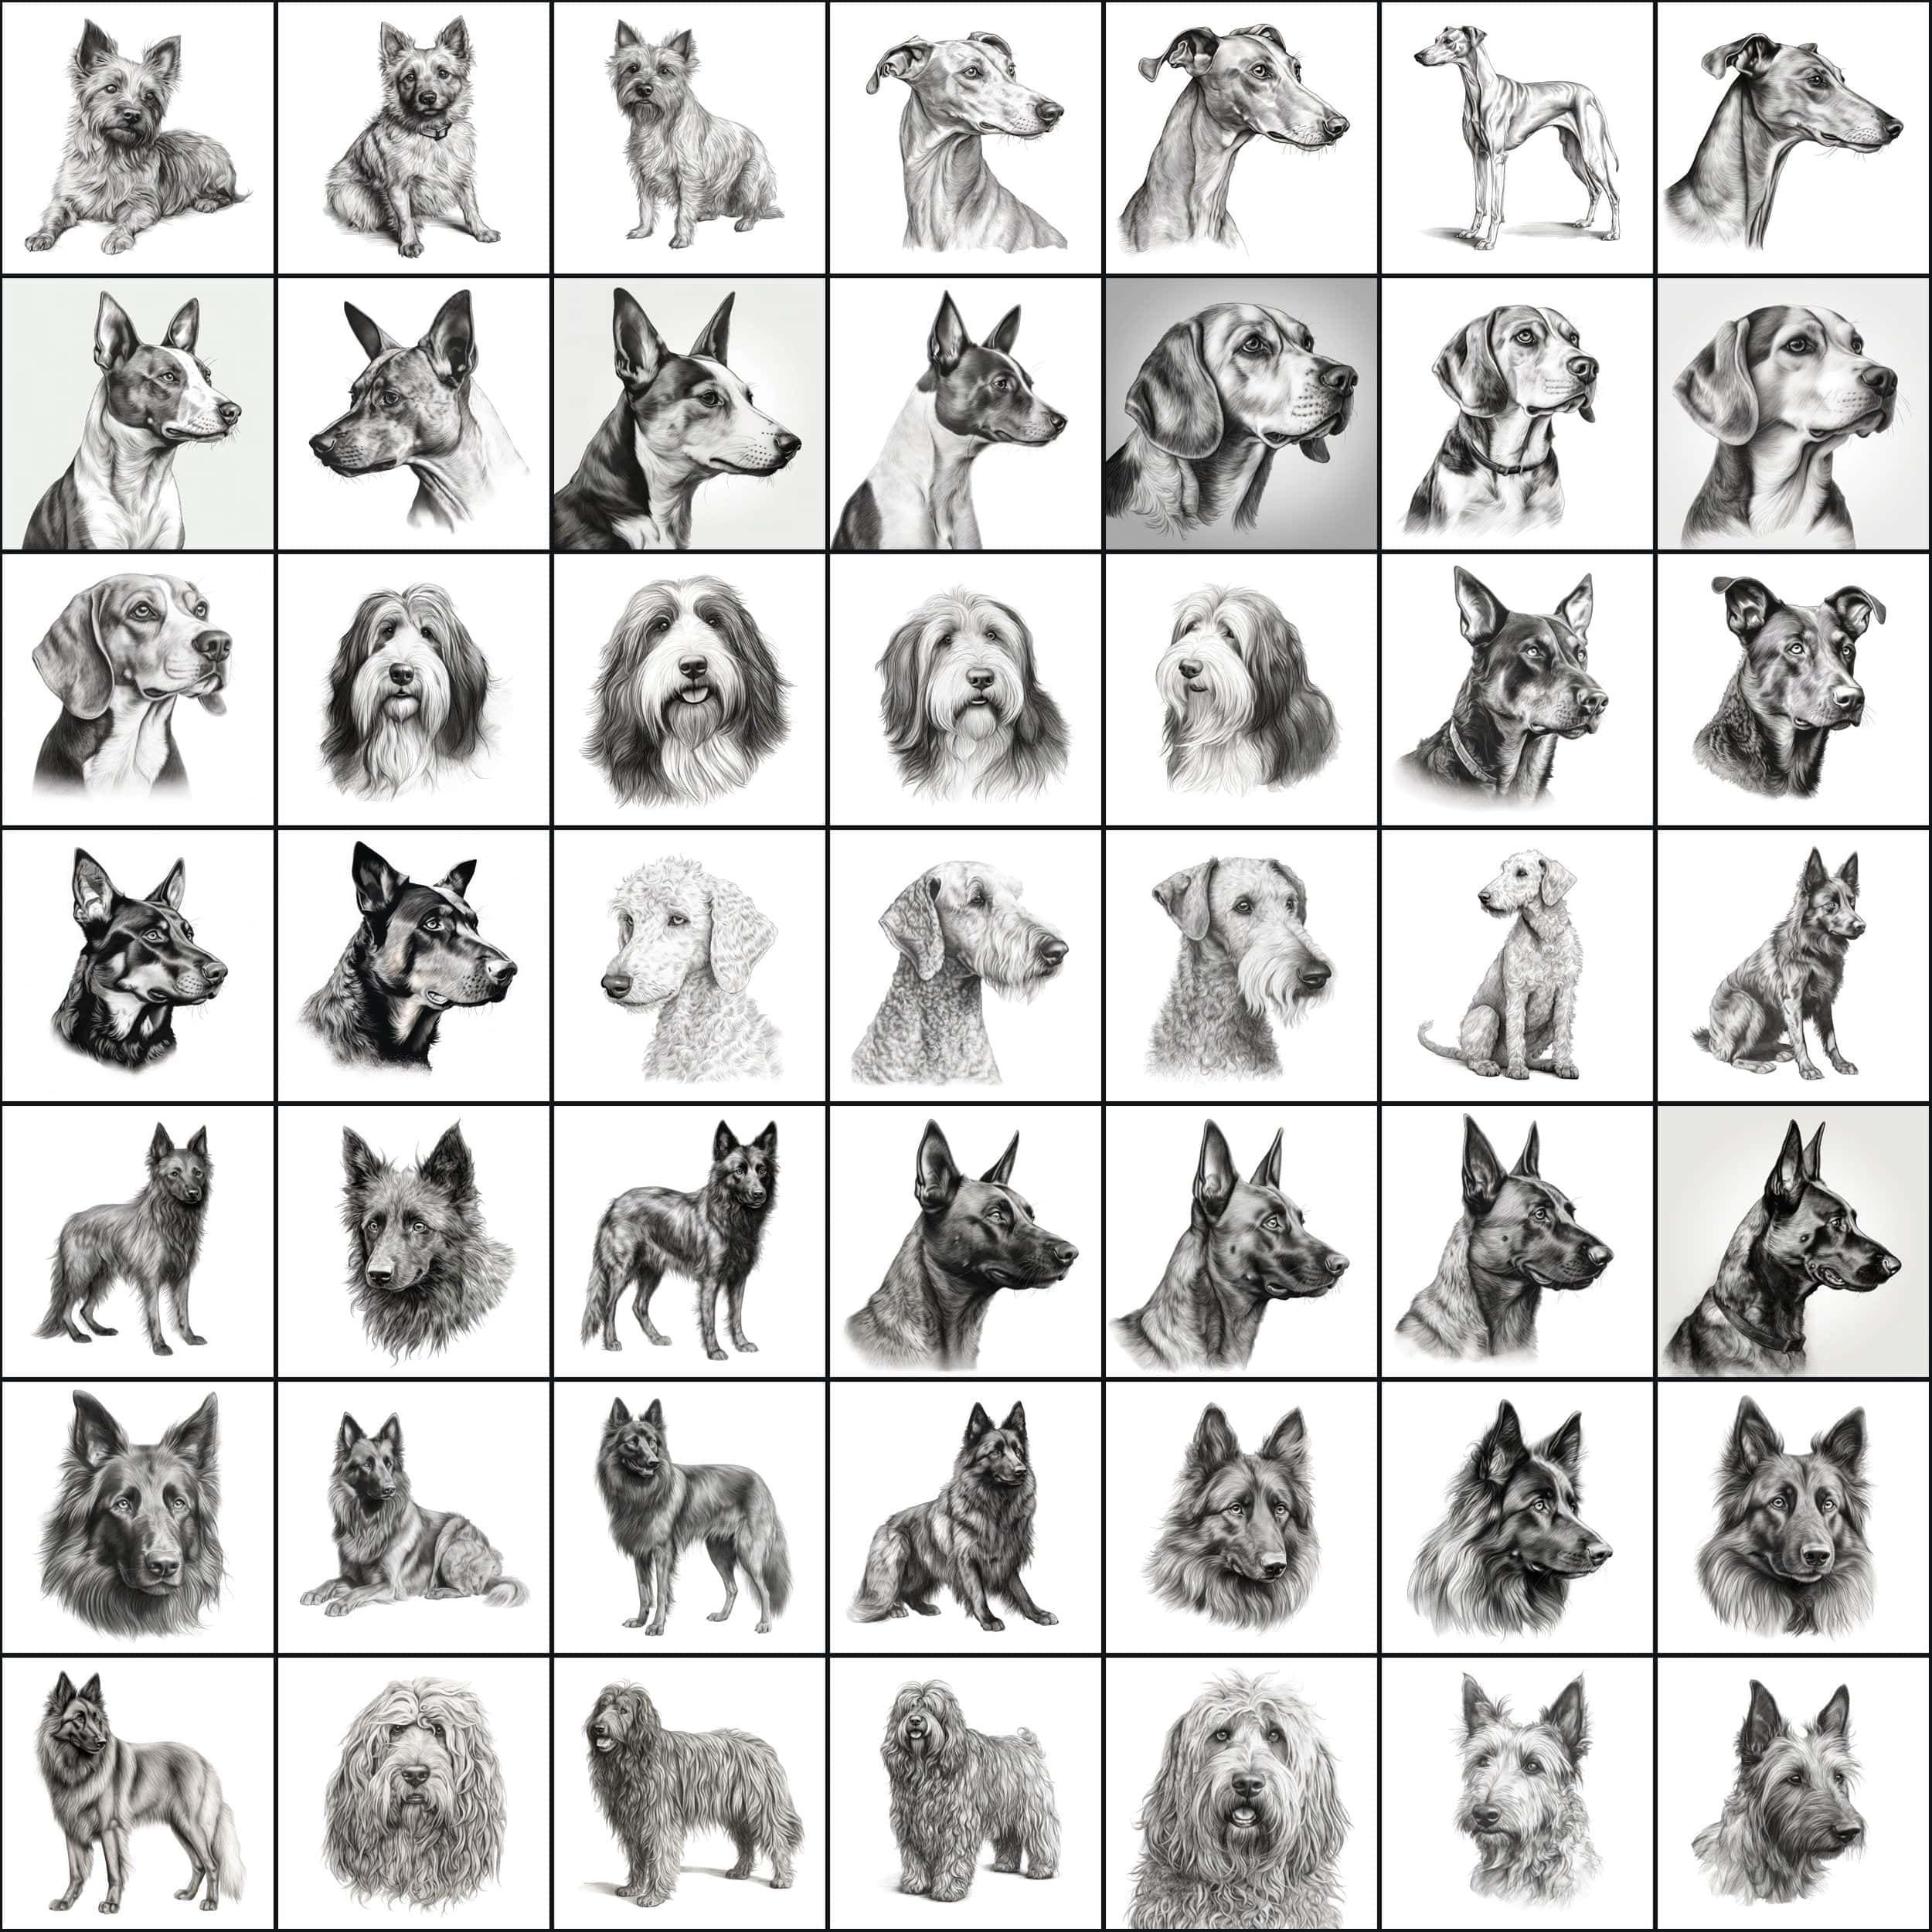 770 Sketch Dog Breed PNGs, Black & White Dog Images, High-Resolution Commercial Use Graphics Digital Download Sumobundle